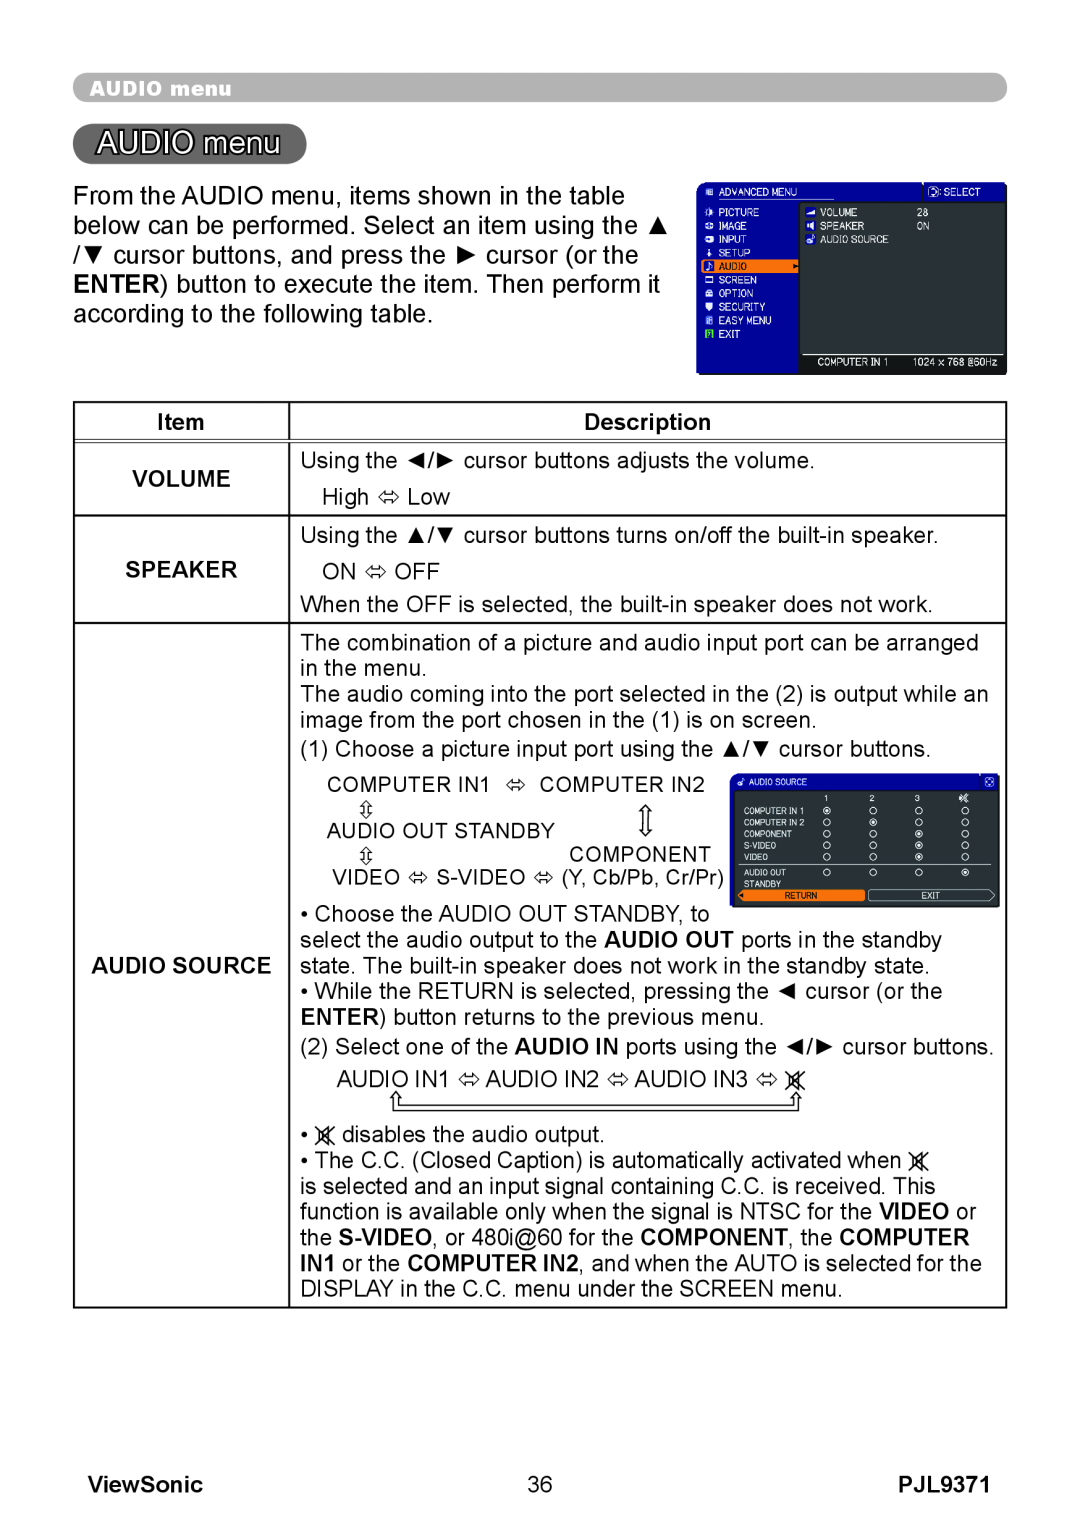 ViewSonic pjl9371 manual AUDIO menu, Item, Description, Volume, Speaker, ViewSonic 